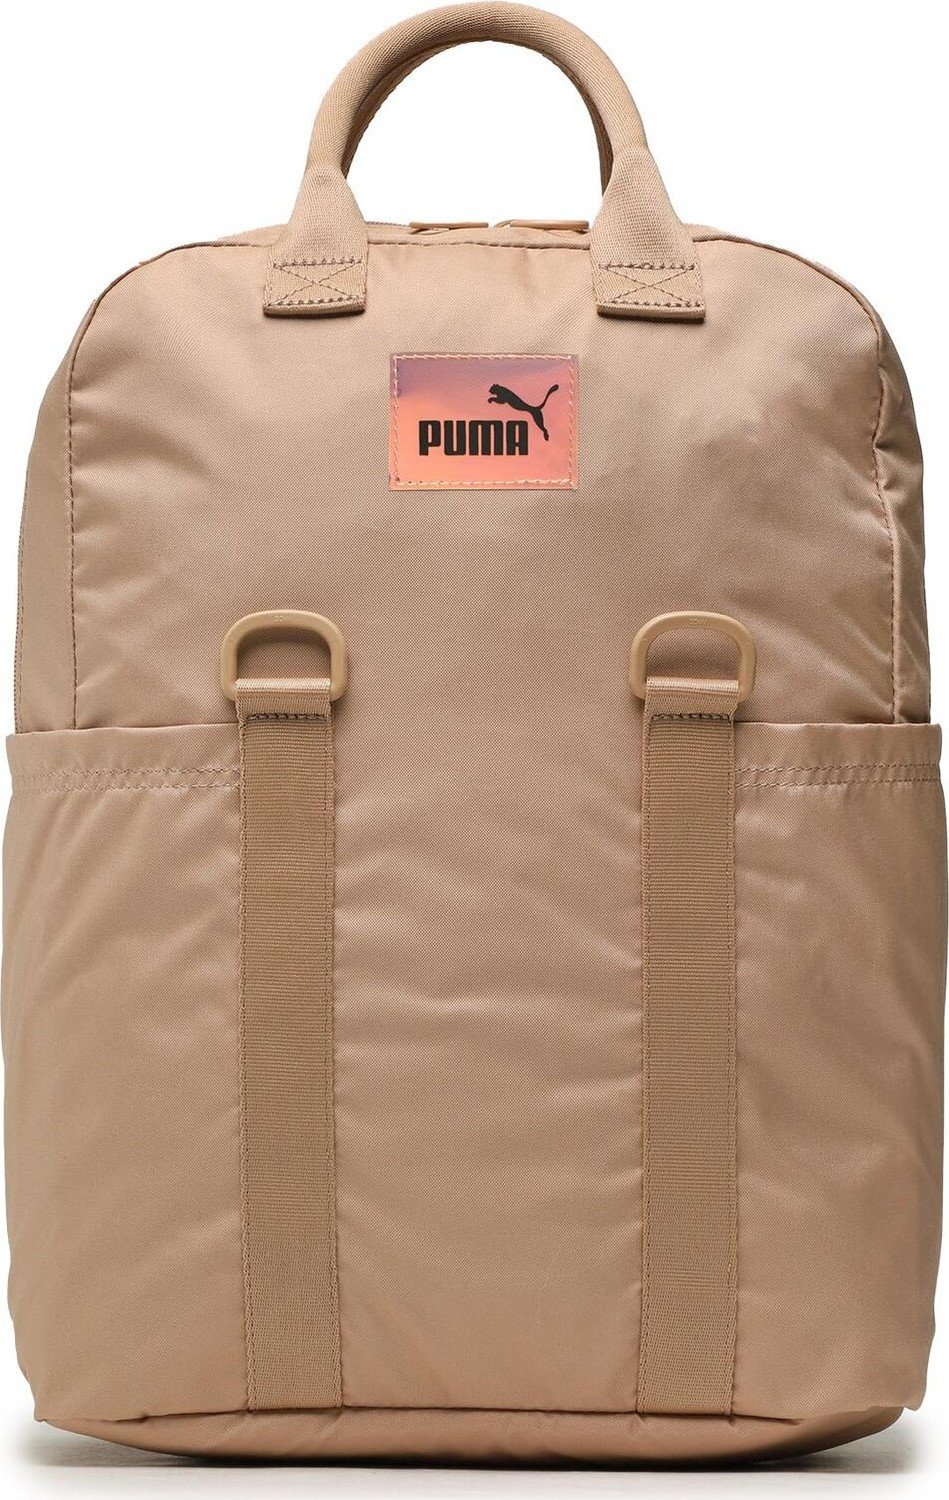 Batoh Puma Core College Bag 079161 Dusty Tan 05